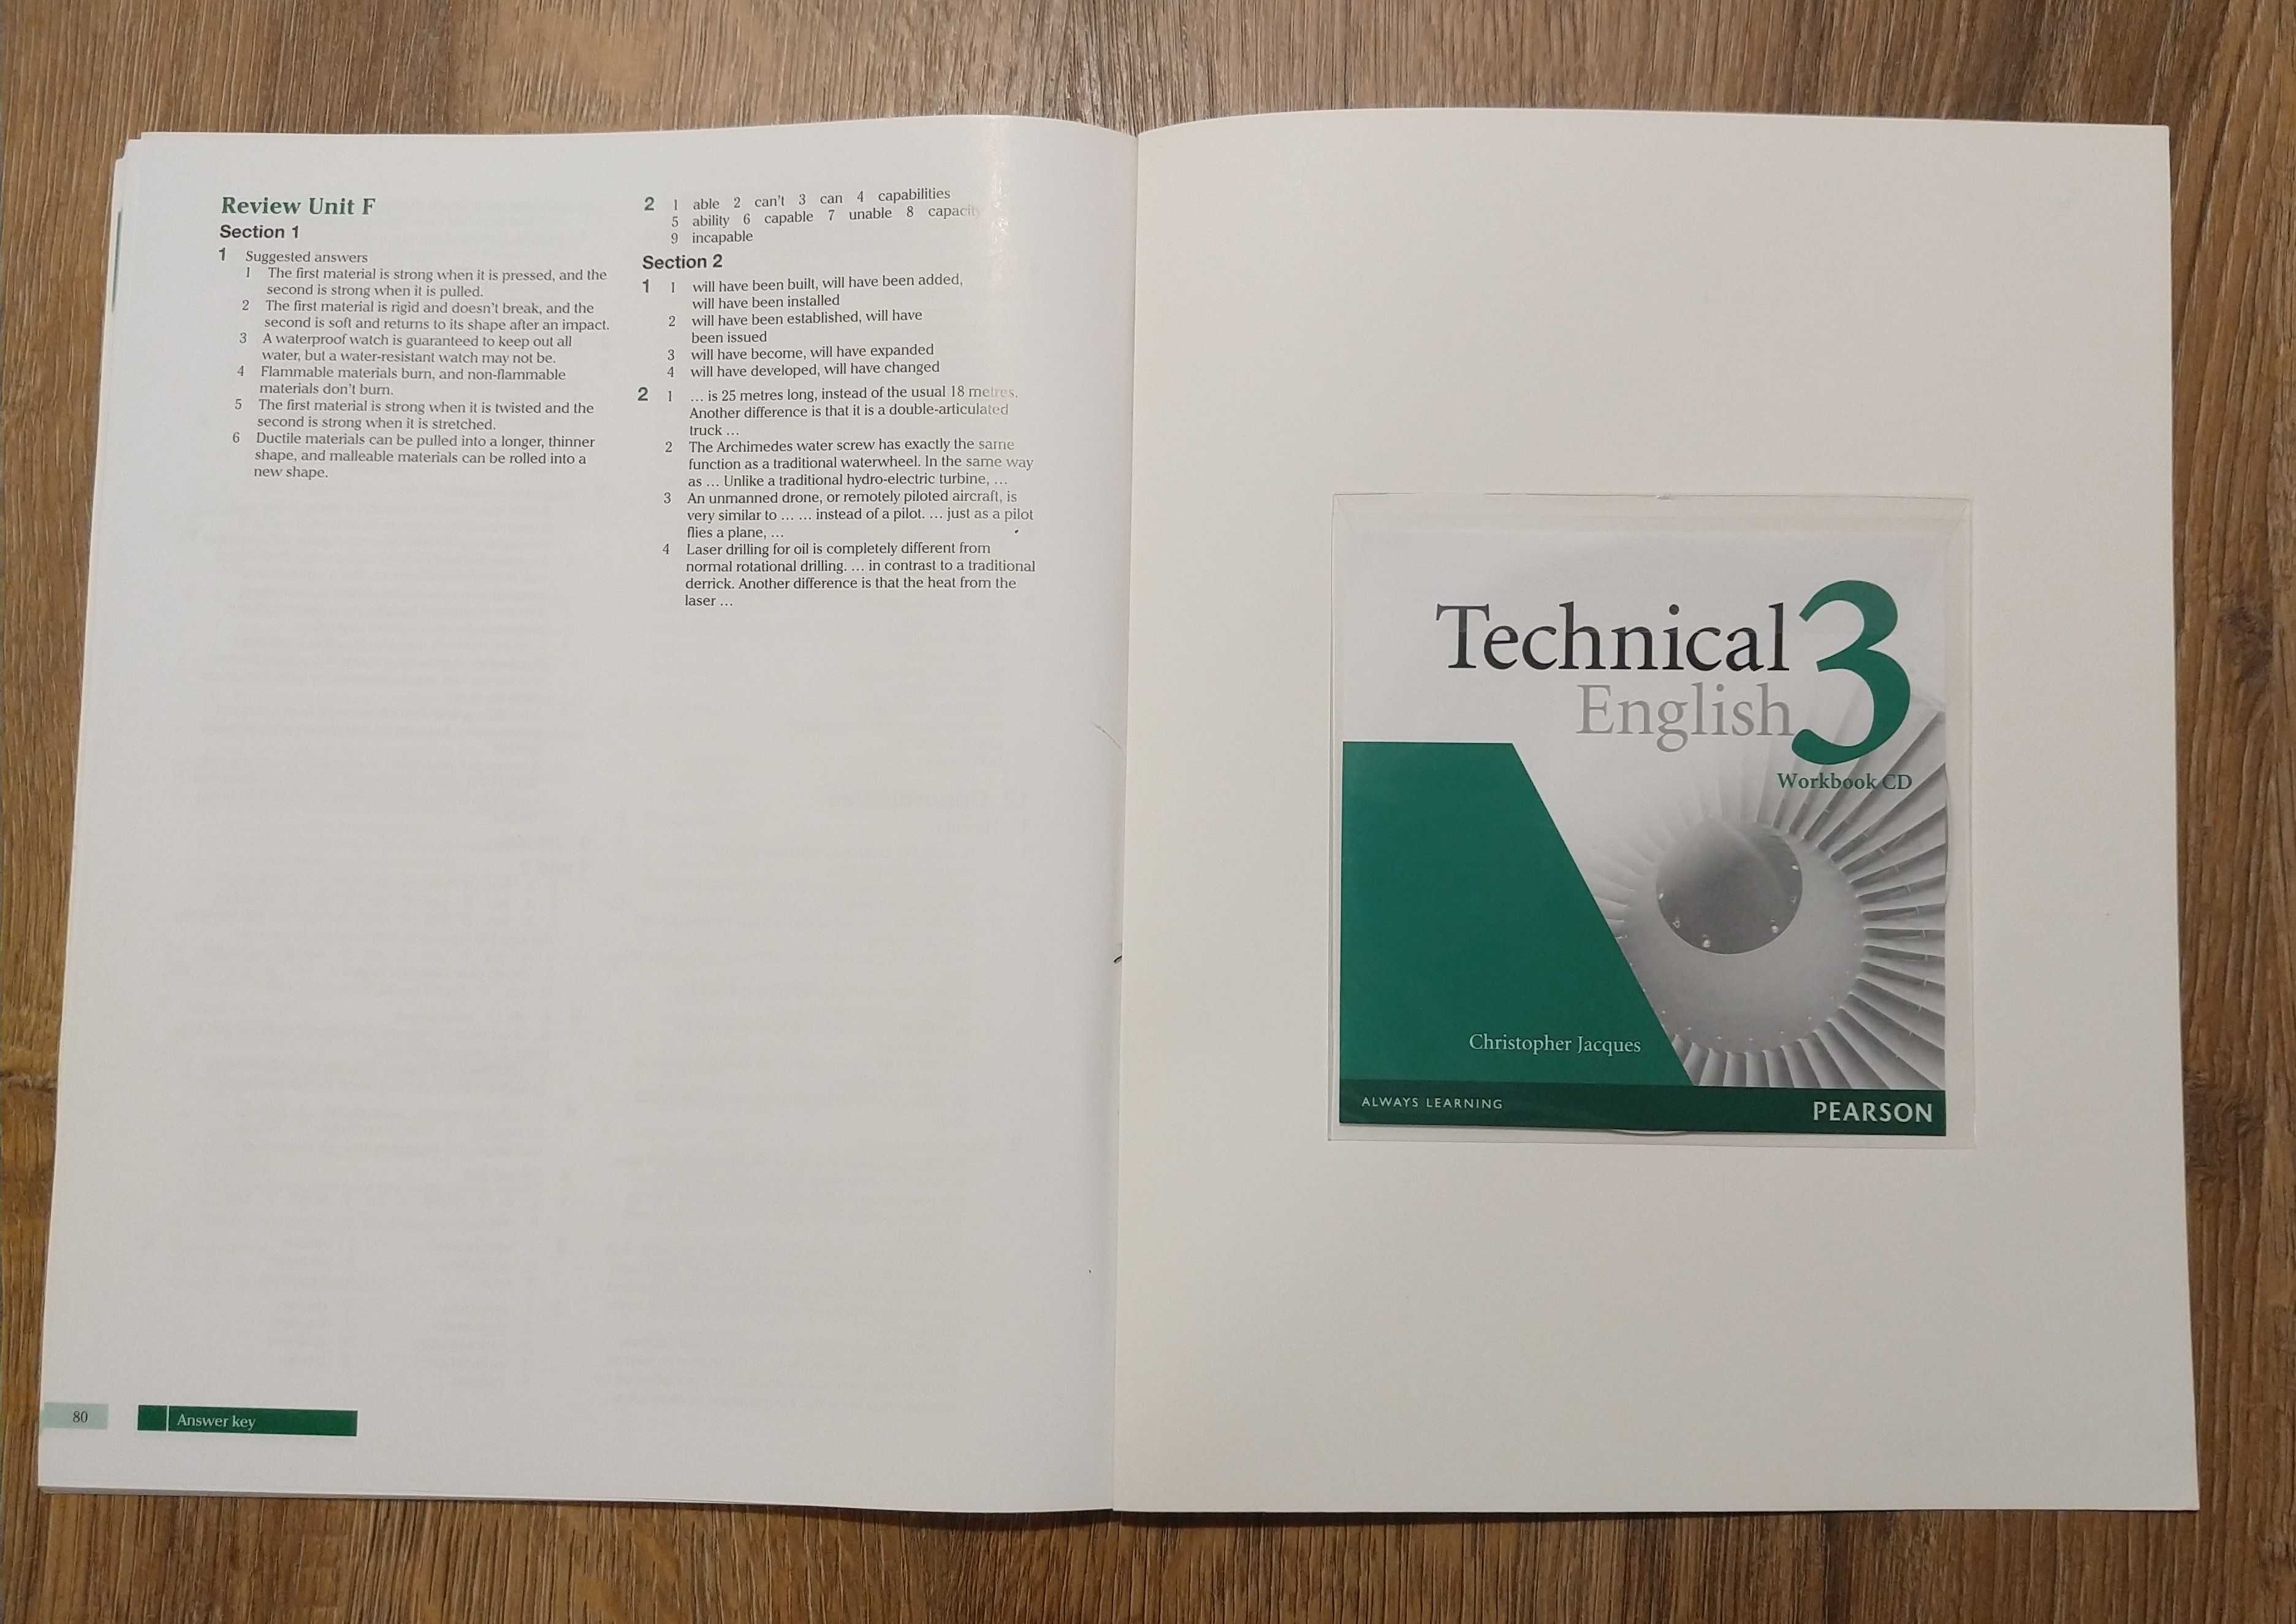 Technical English 3 workbook i course book